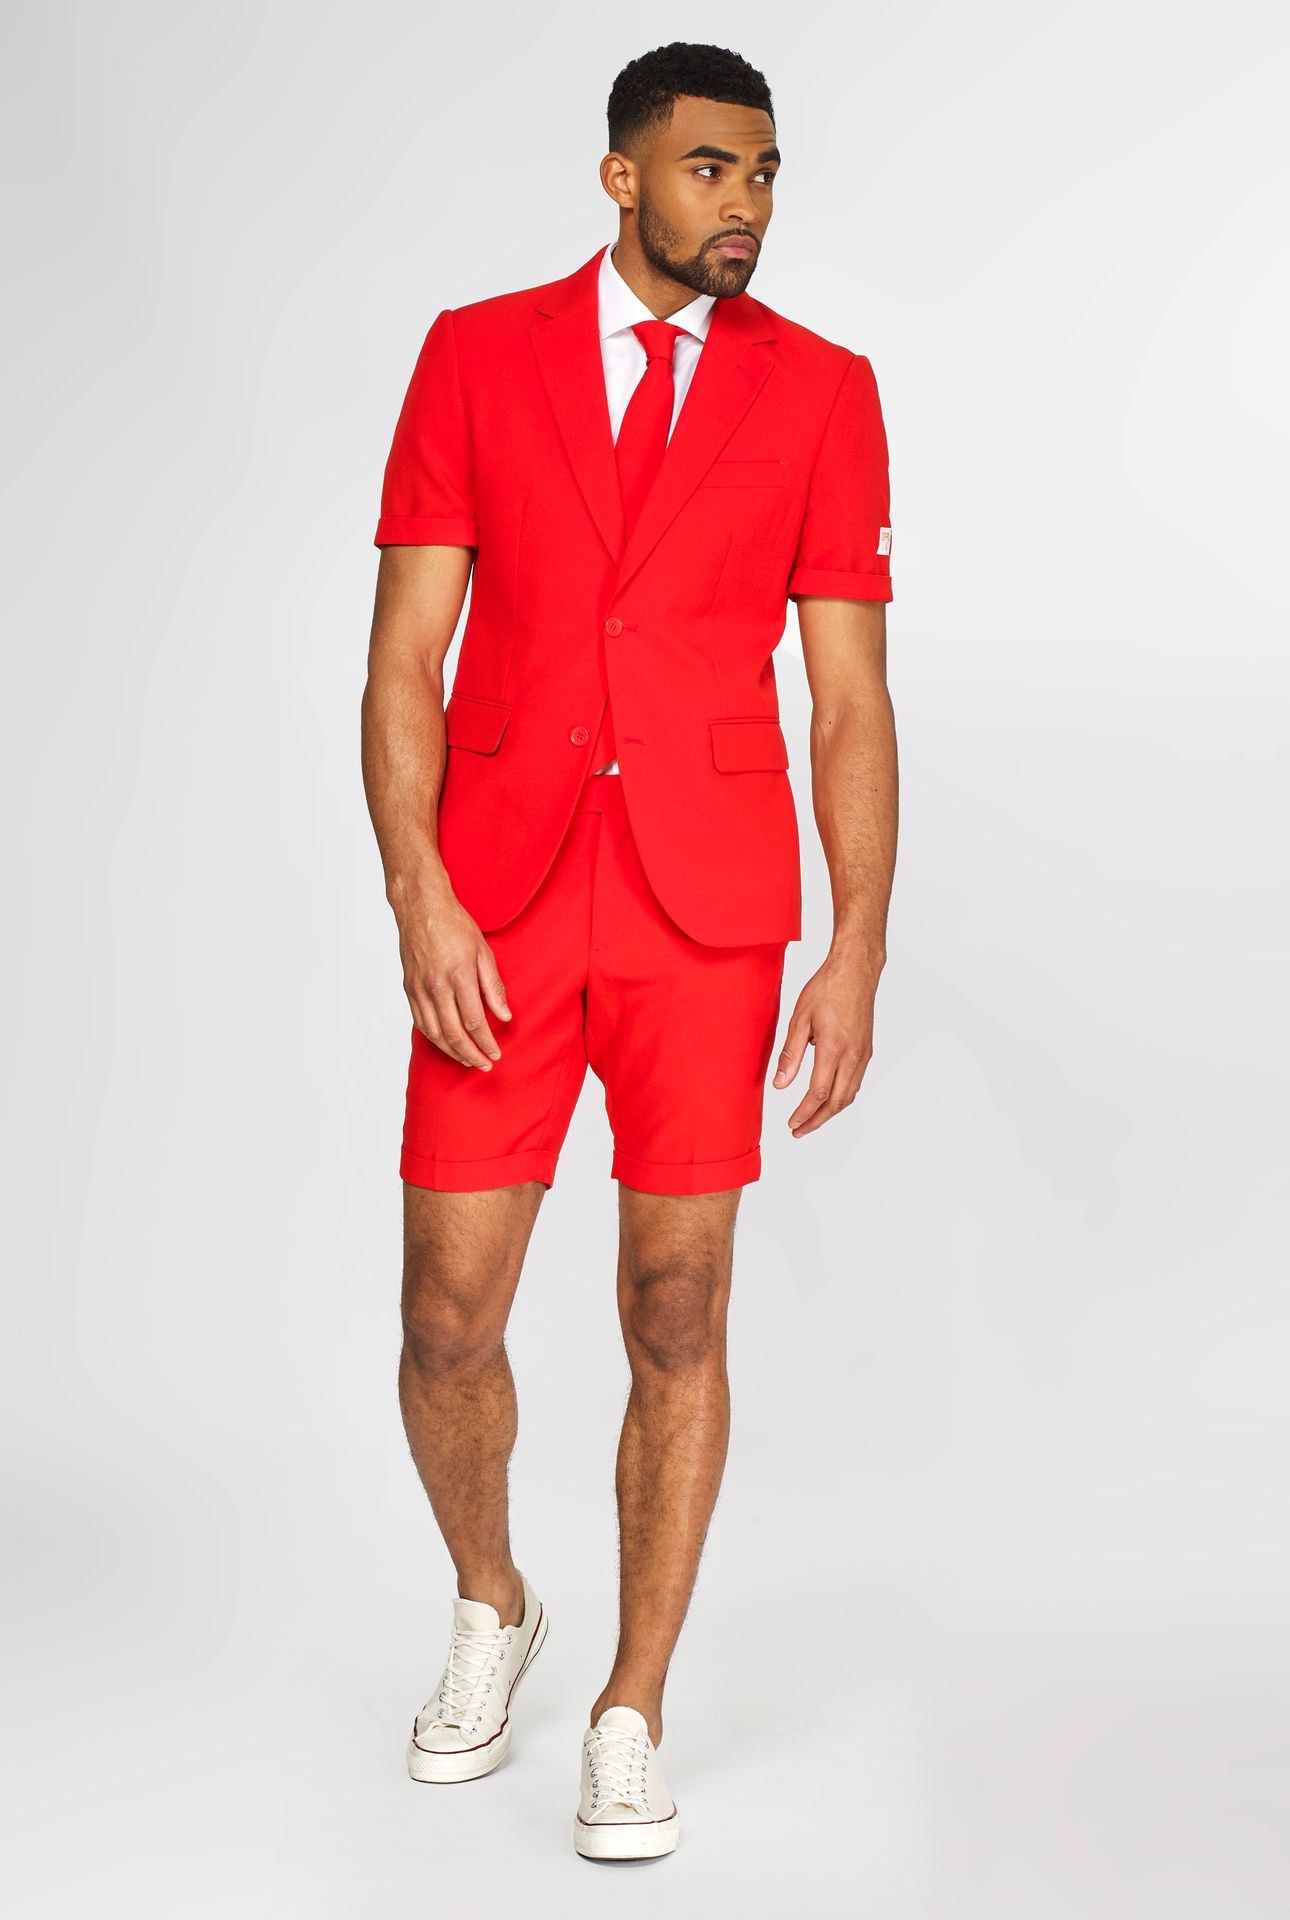 Rood Opposuits zomer kostuum